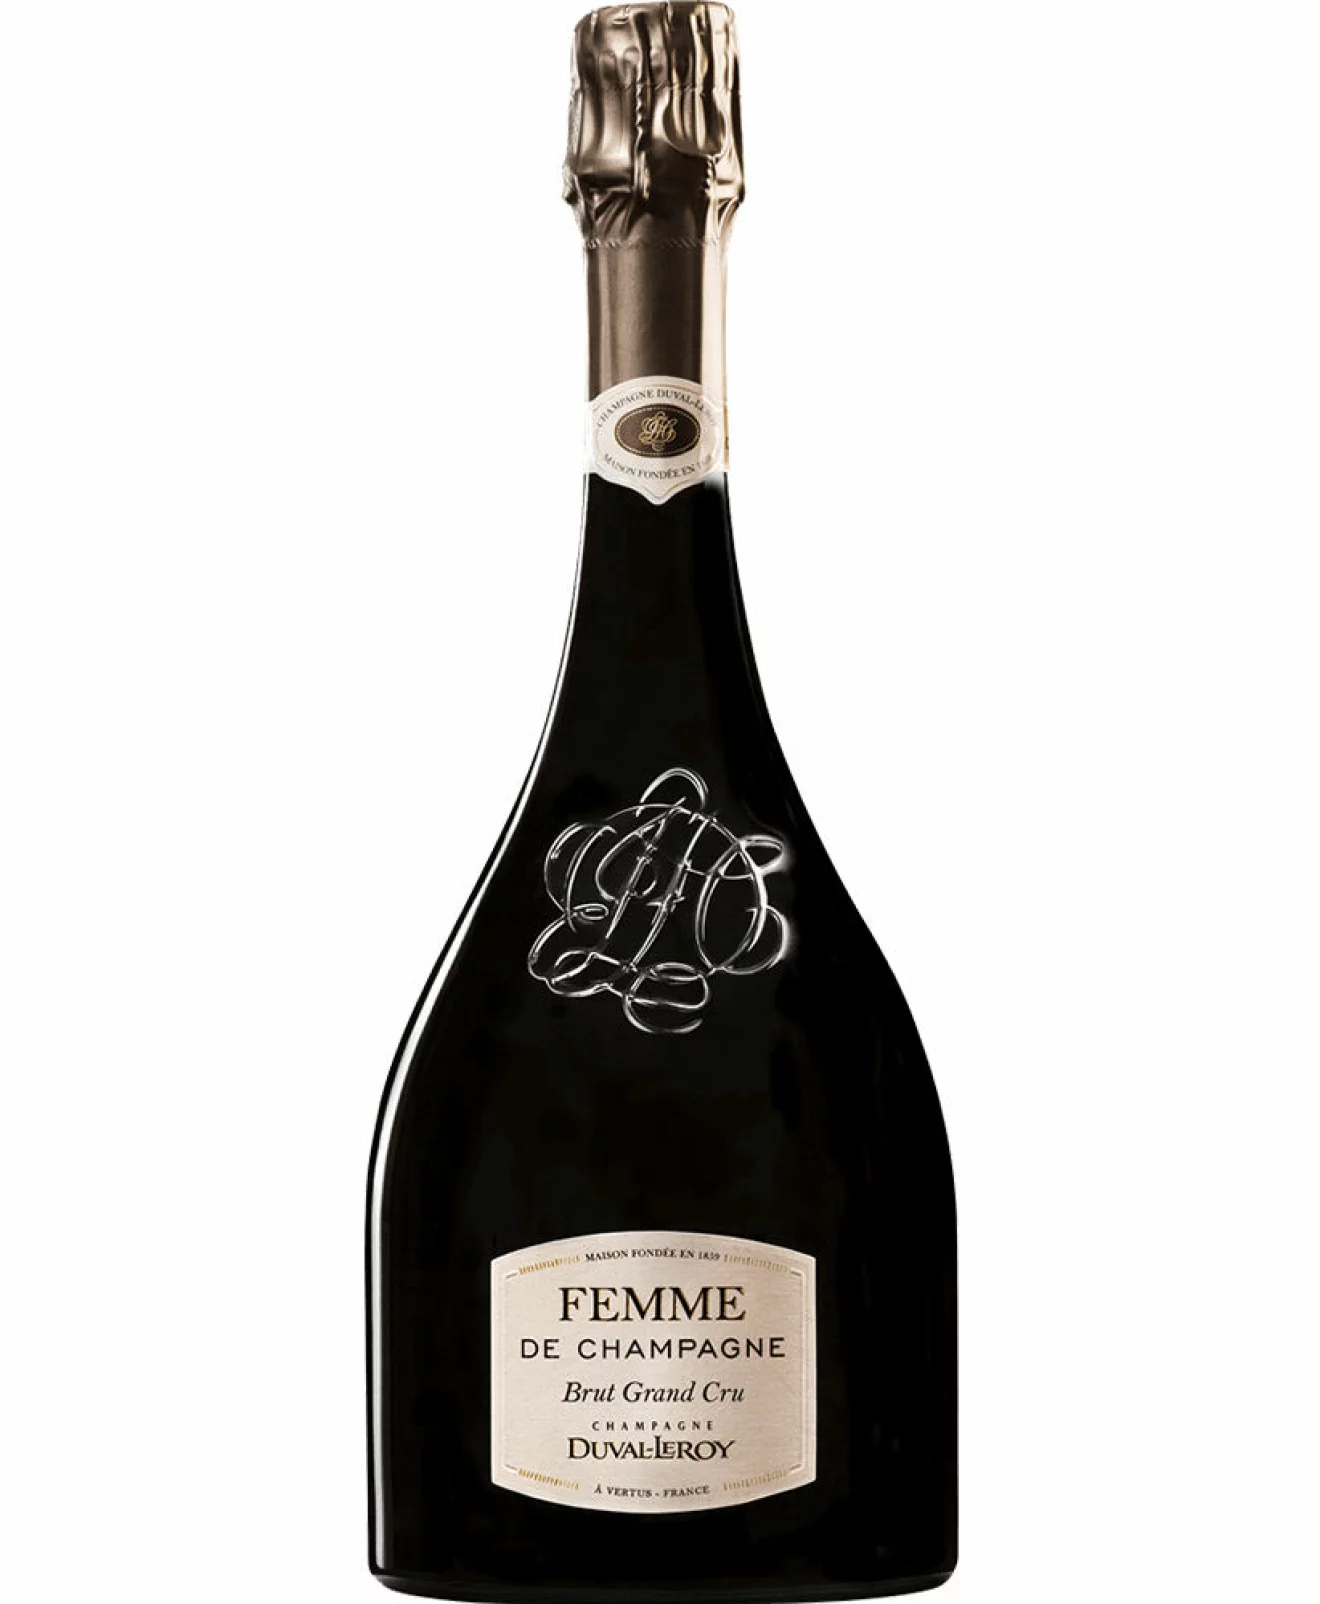 Duval-Leroy Femme de Champagne Grand Cru Brut, Frankrike, Champagne (52372) 829 kr, BS.